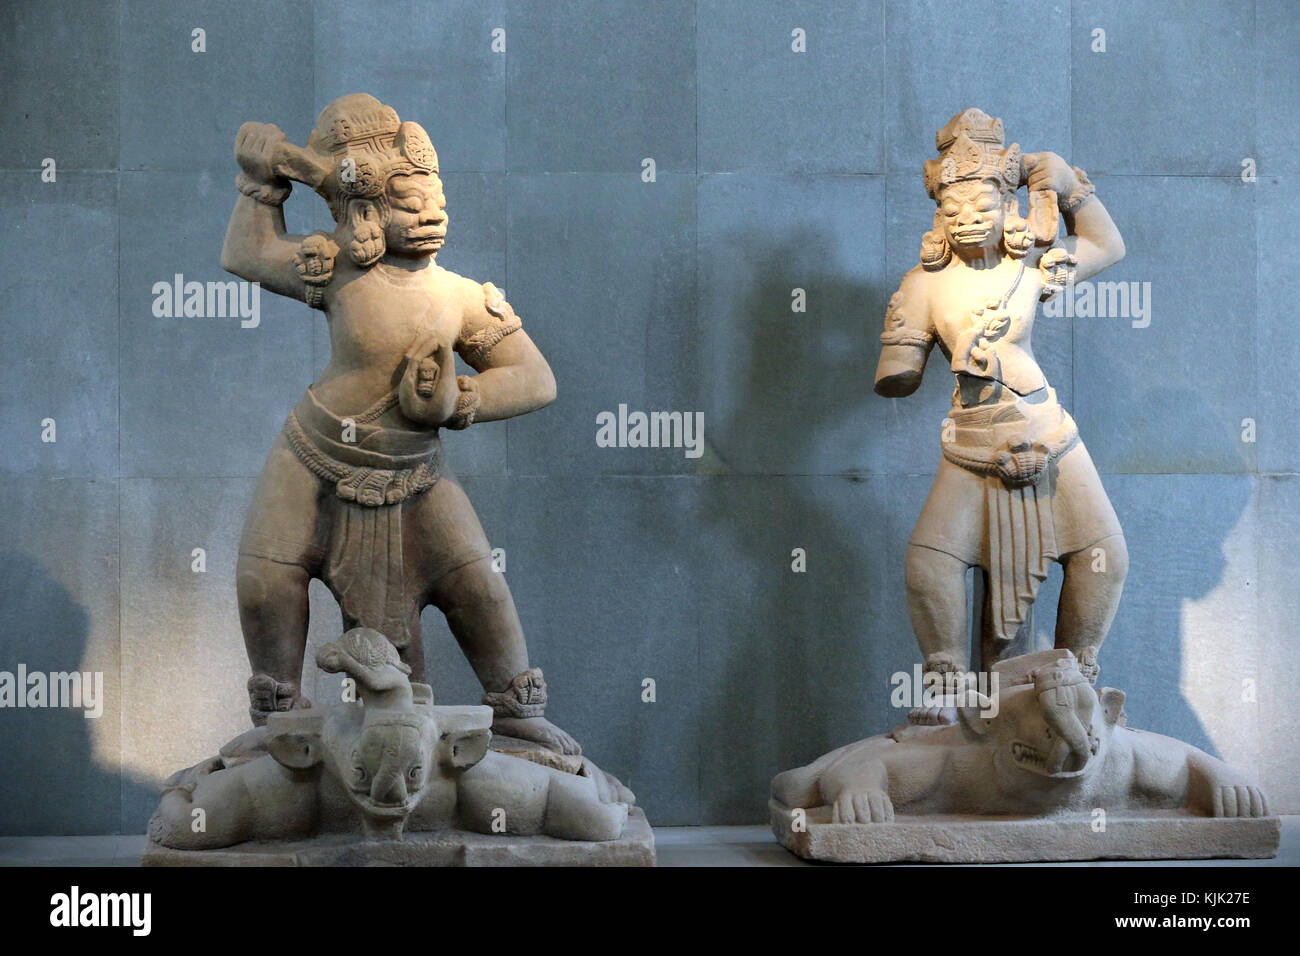 Museum of Cham Sculpture.  Demigod guarding the gateway. 10th century.  Danang. Vietnam. Stock Photo